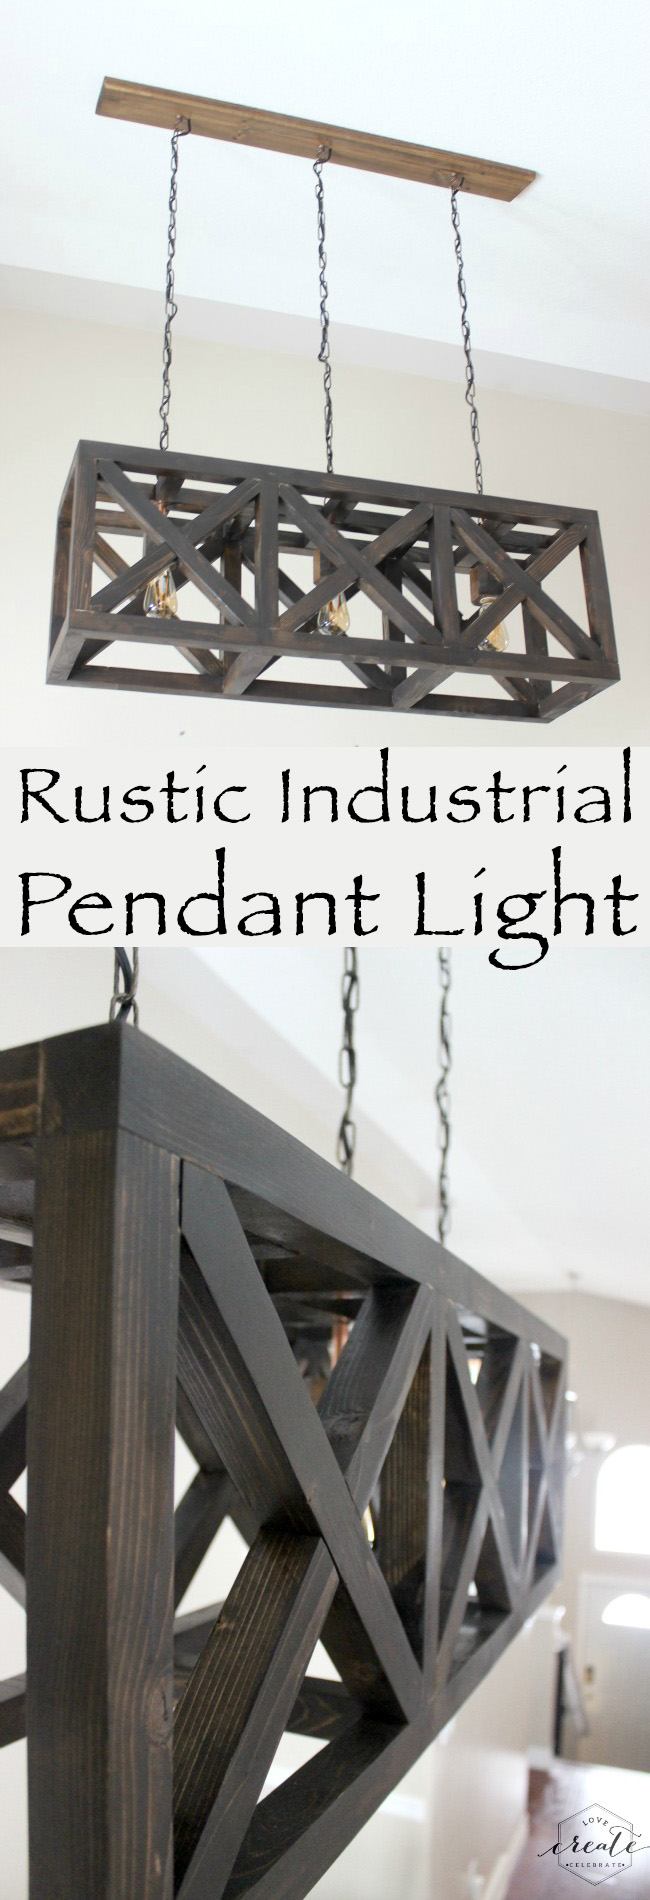 Rustic Industrial Pendant Light